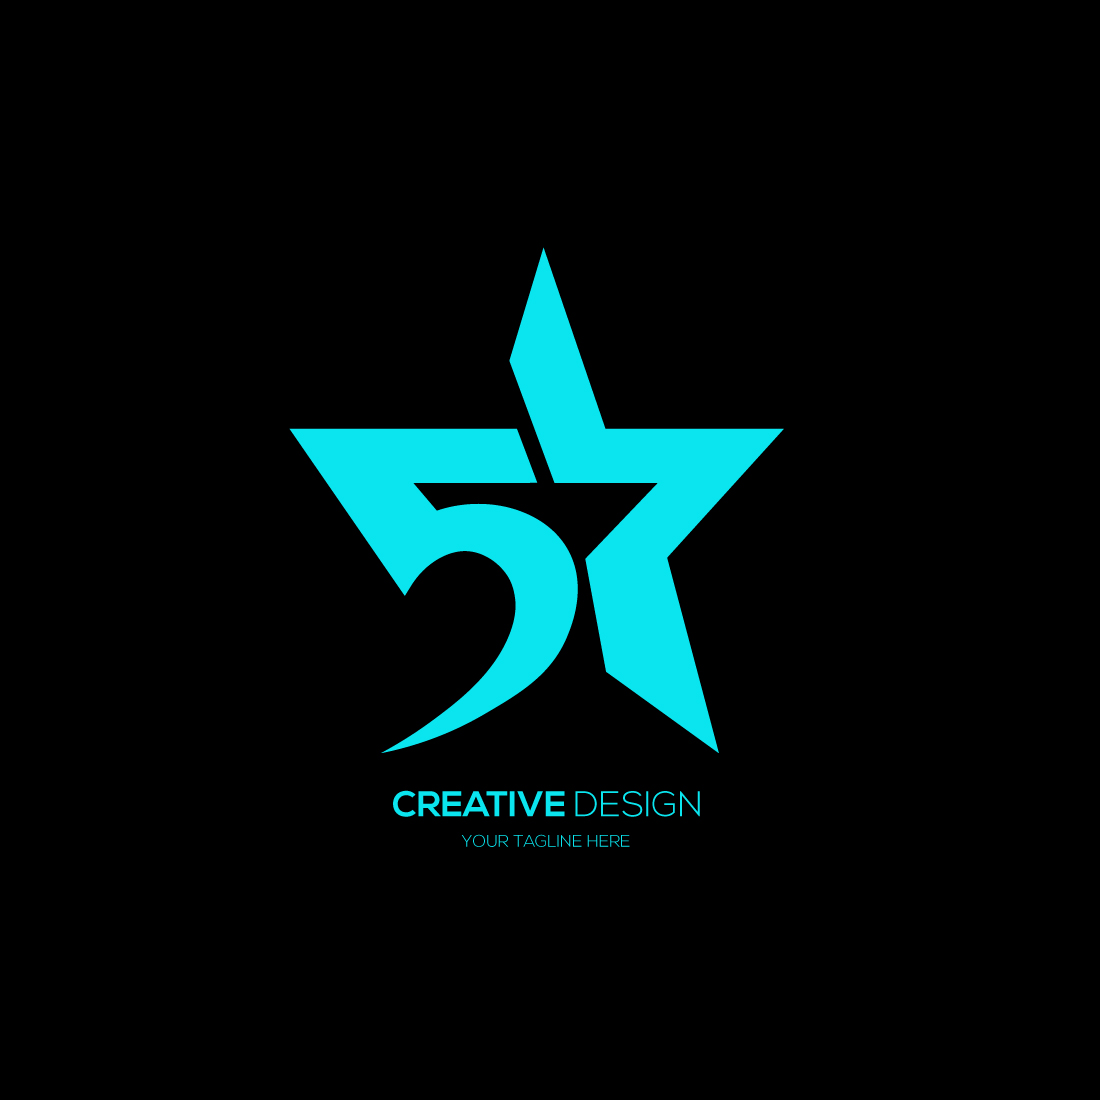 Modern letter 5-star imaginative shape logo preview image.